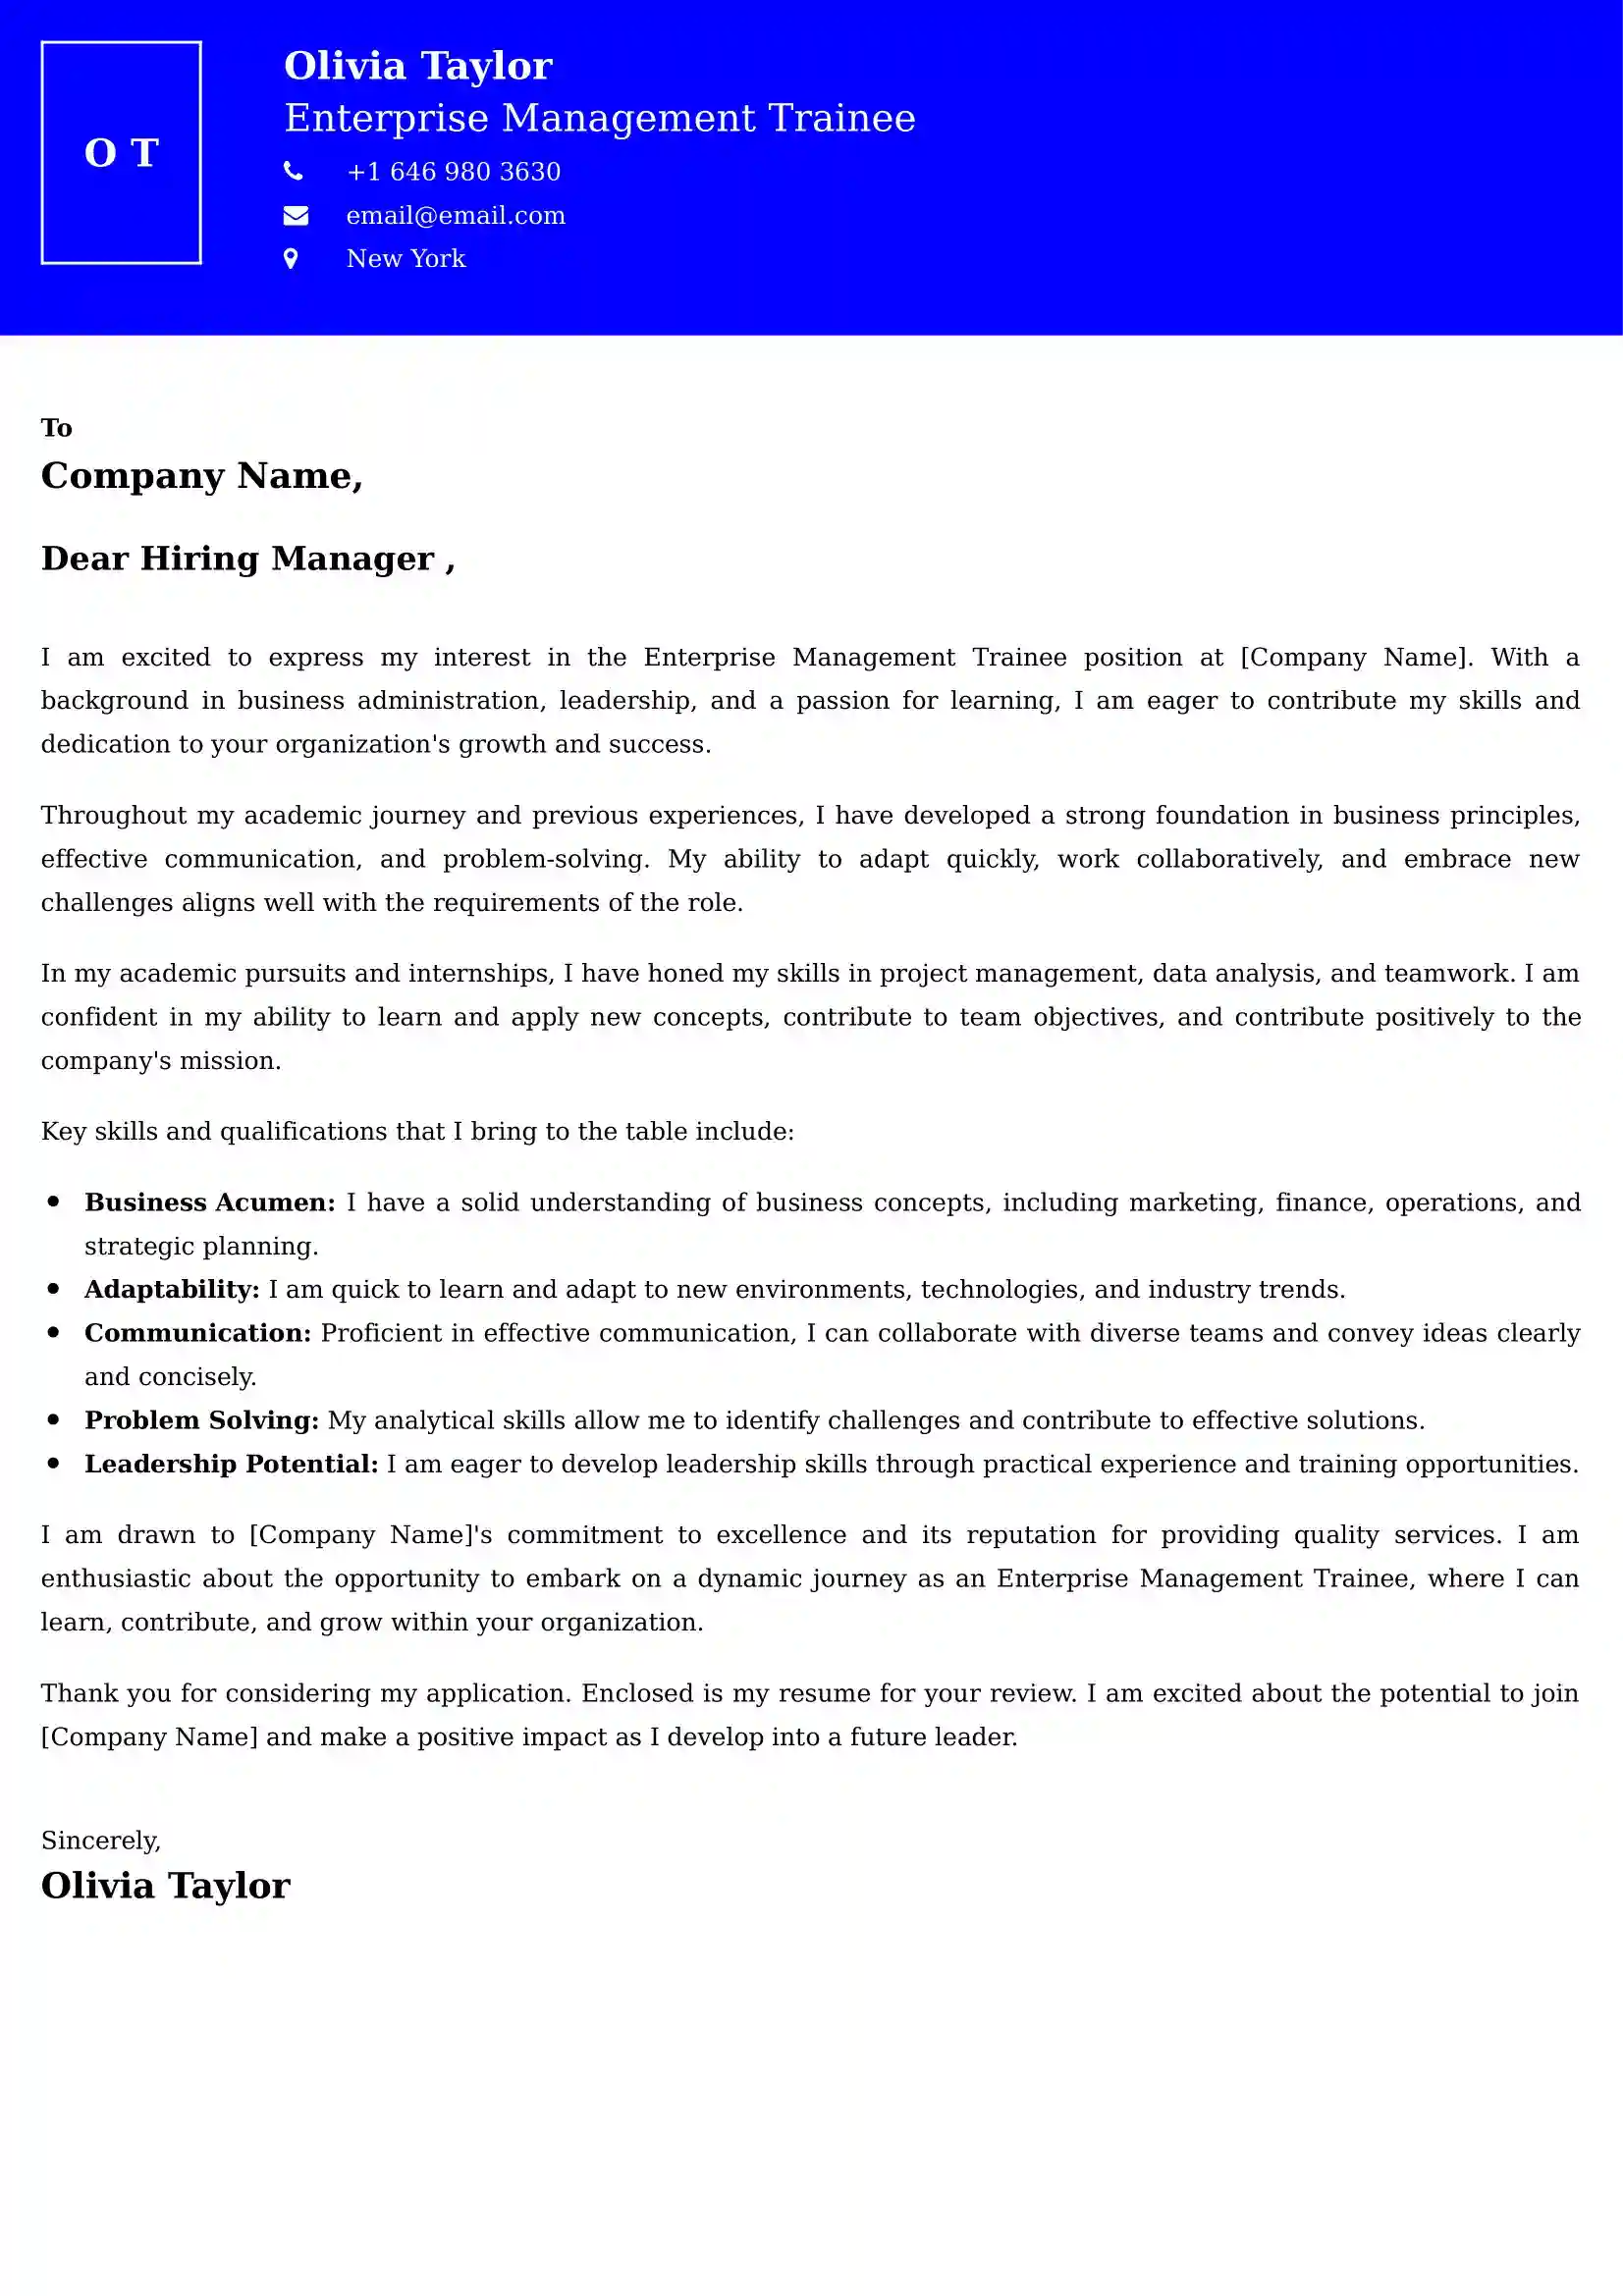 Enterprise Management Trainee Cover Letter Examples Australia